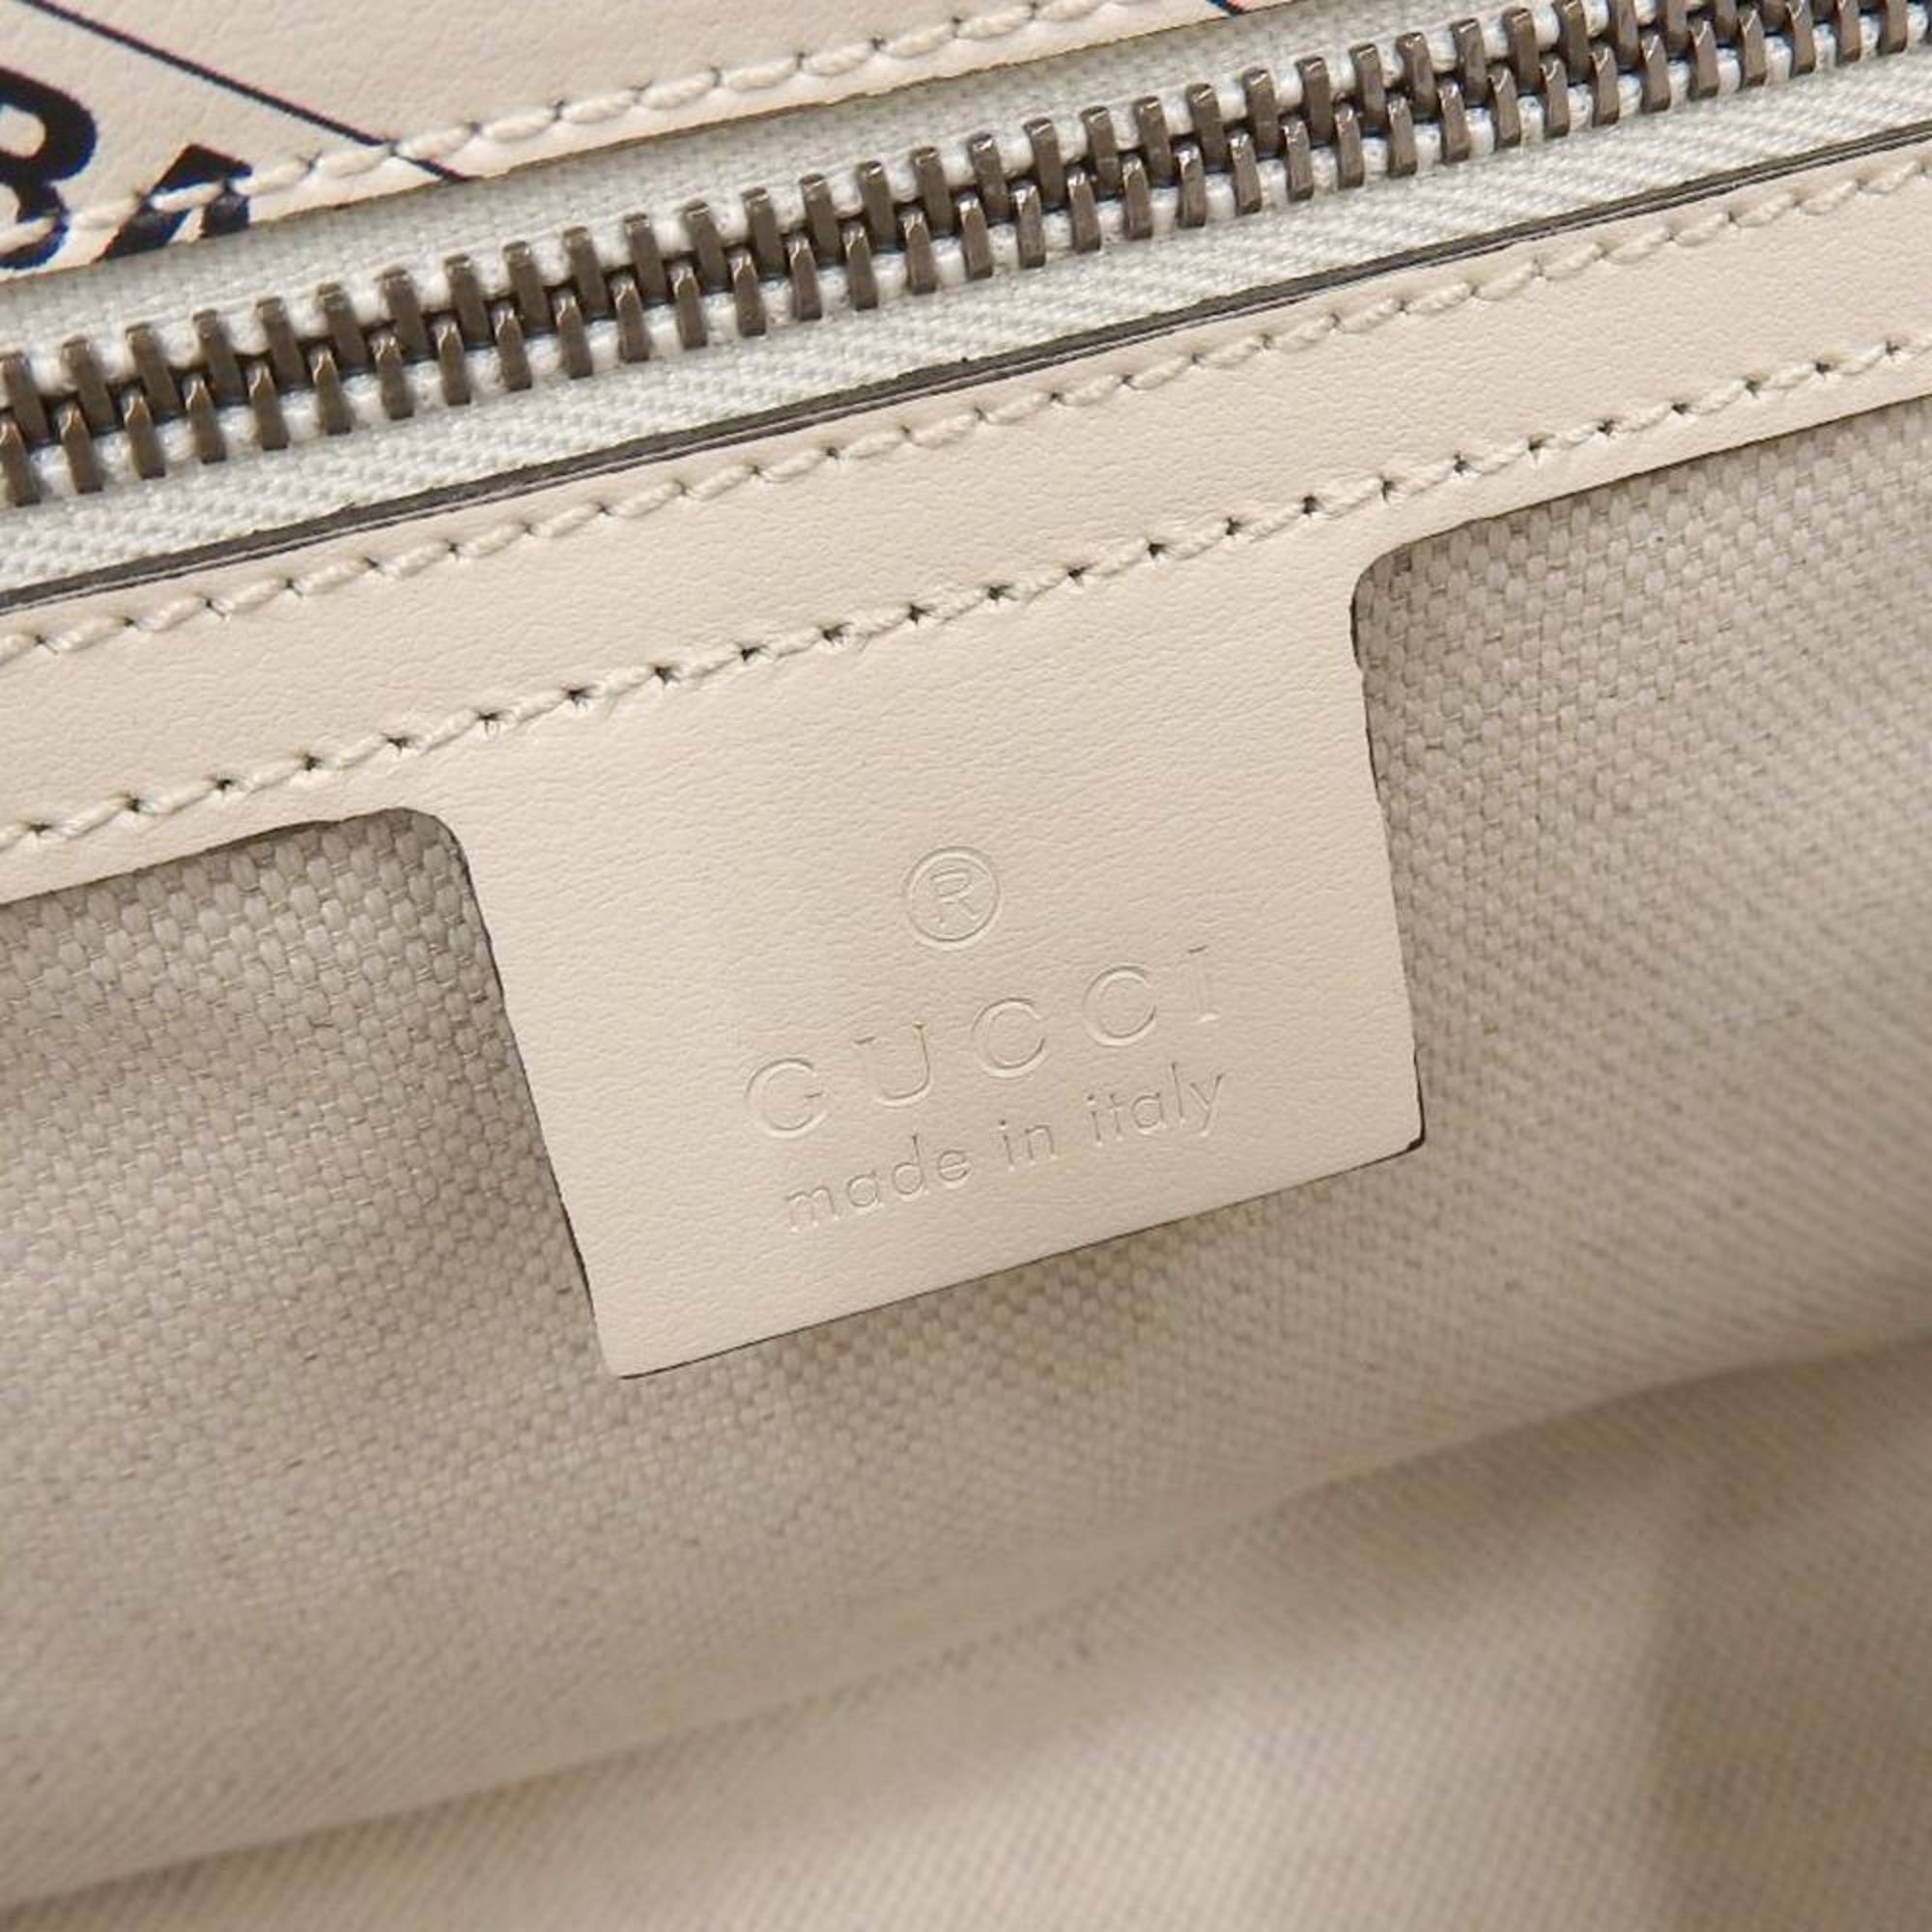 Gucci x Balenciaga GG Marmont The Hacker Project Small Bag Shoulder 443497 520981